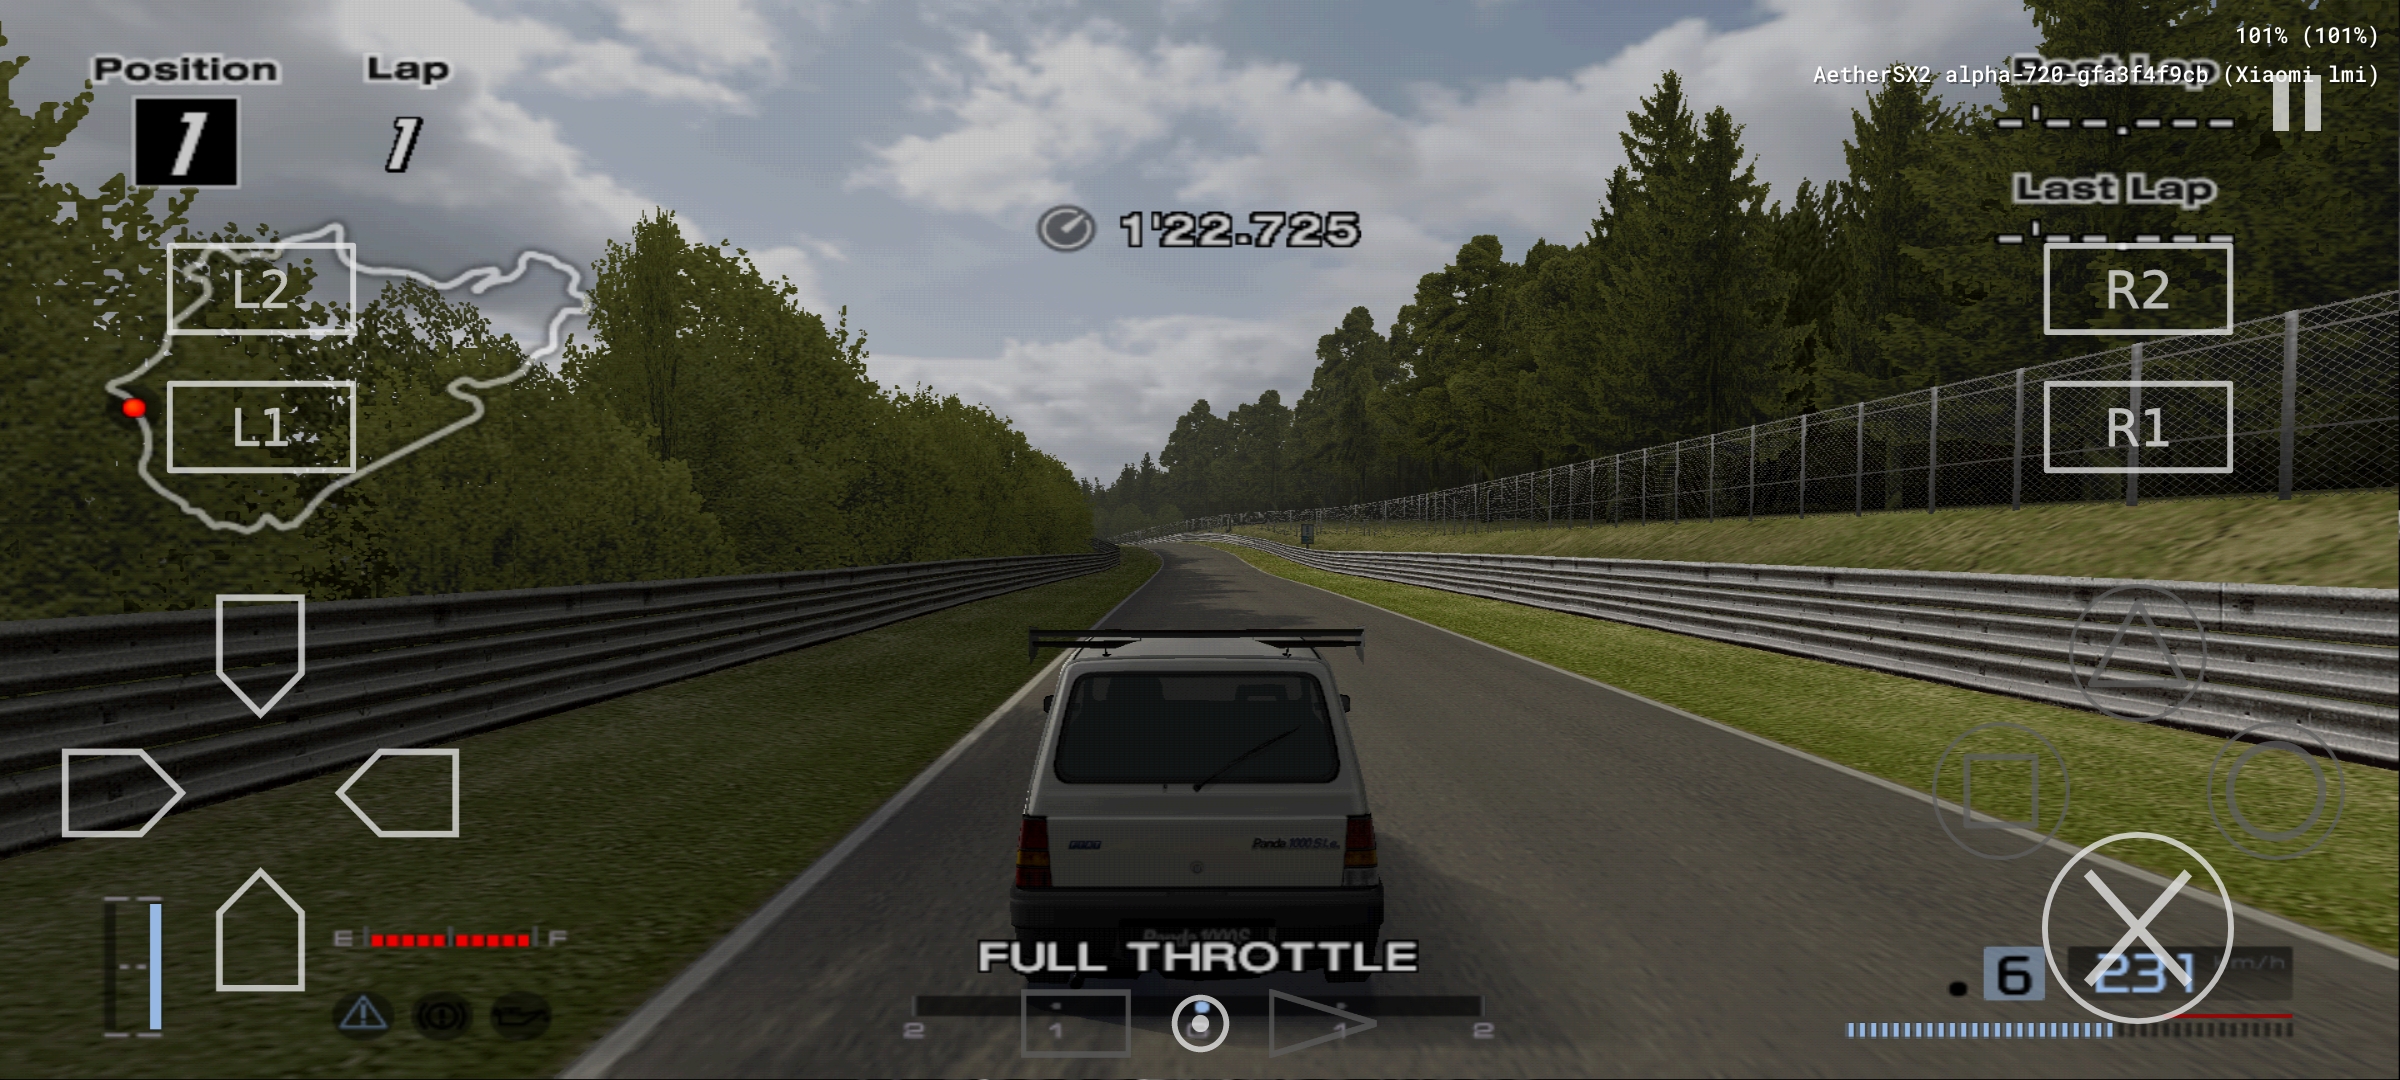 Gran Turismo 4 on Poco X3 Pro (SD860) 2X resolution 50 fps avg :  r/EmulationOnAndroid